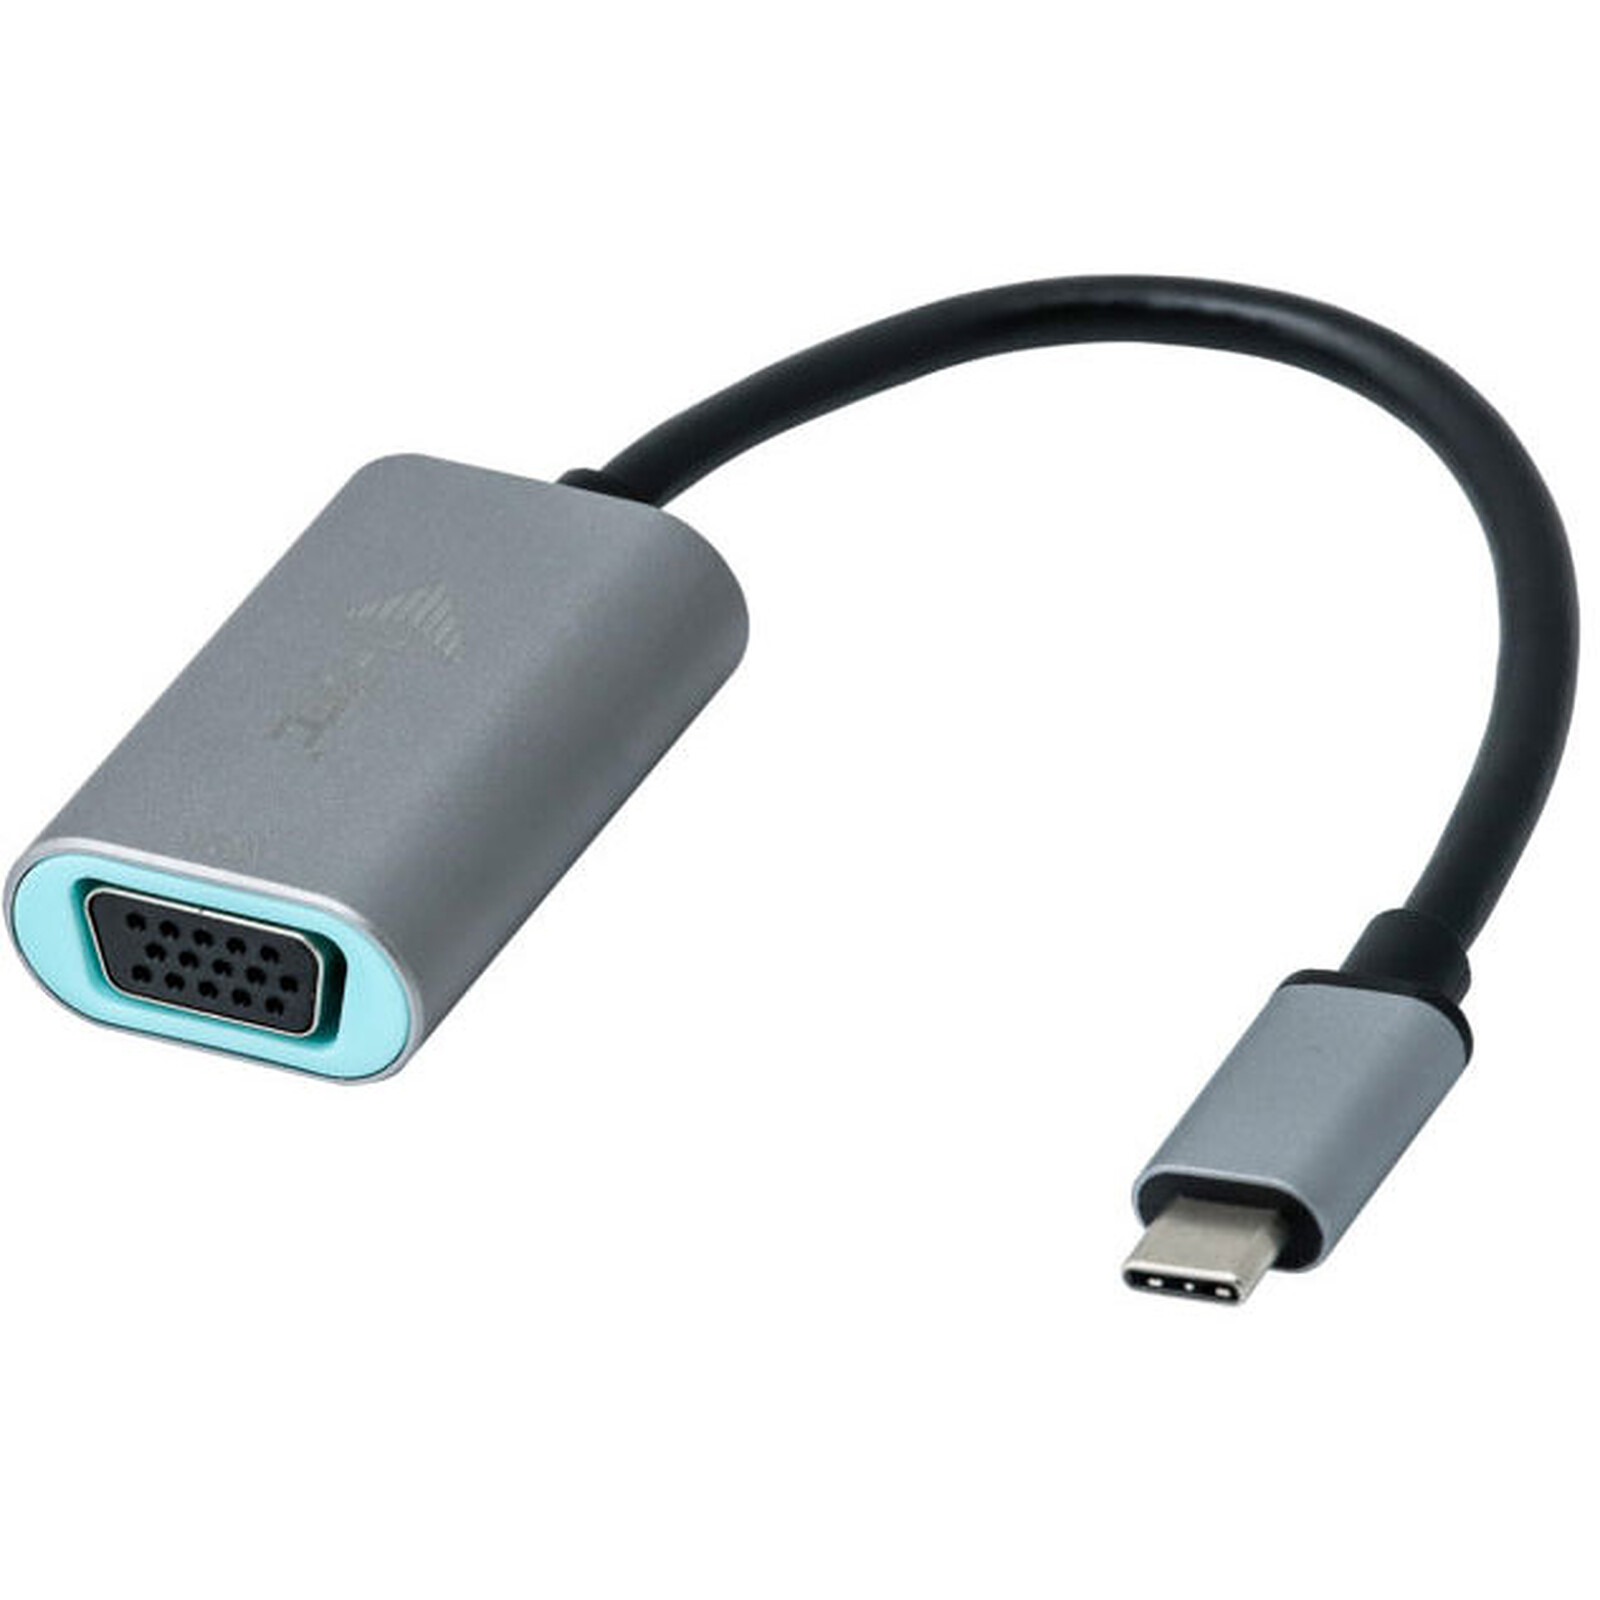 ADAPTATEUR USB Type C mâle - VGA femelle, 15cm